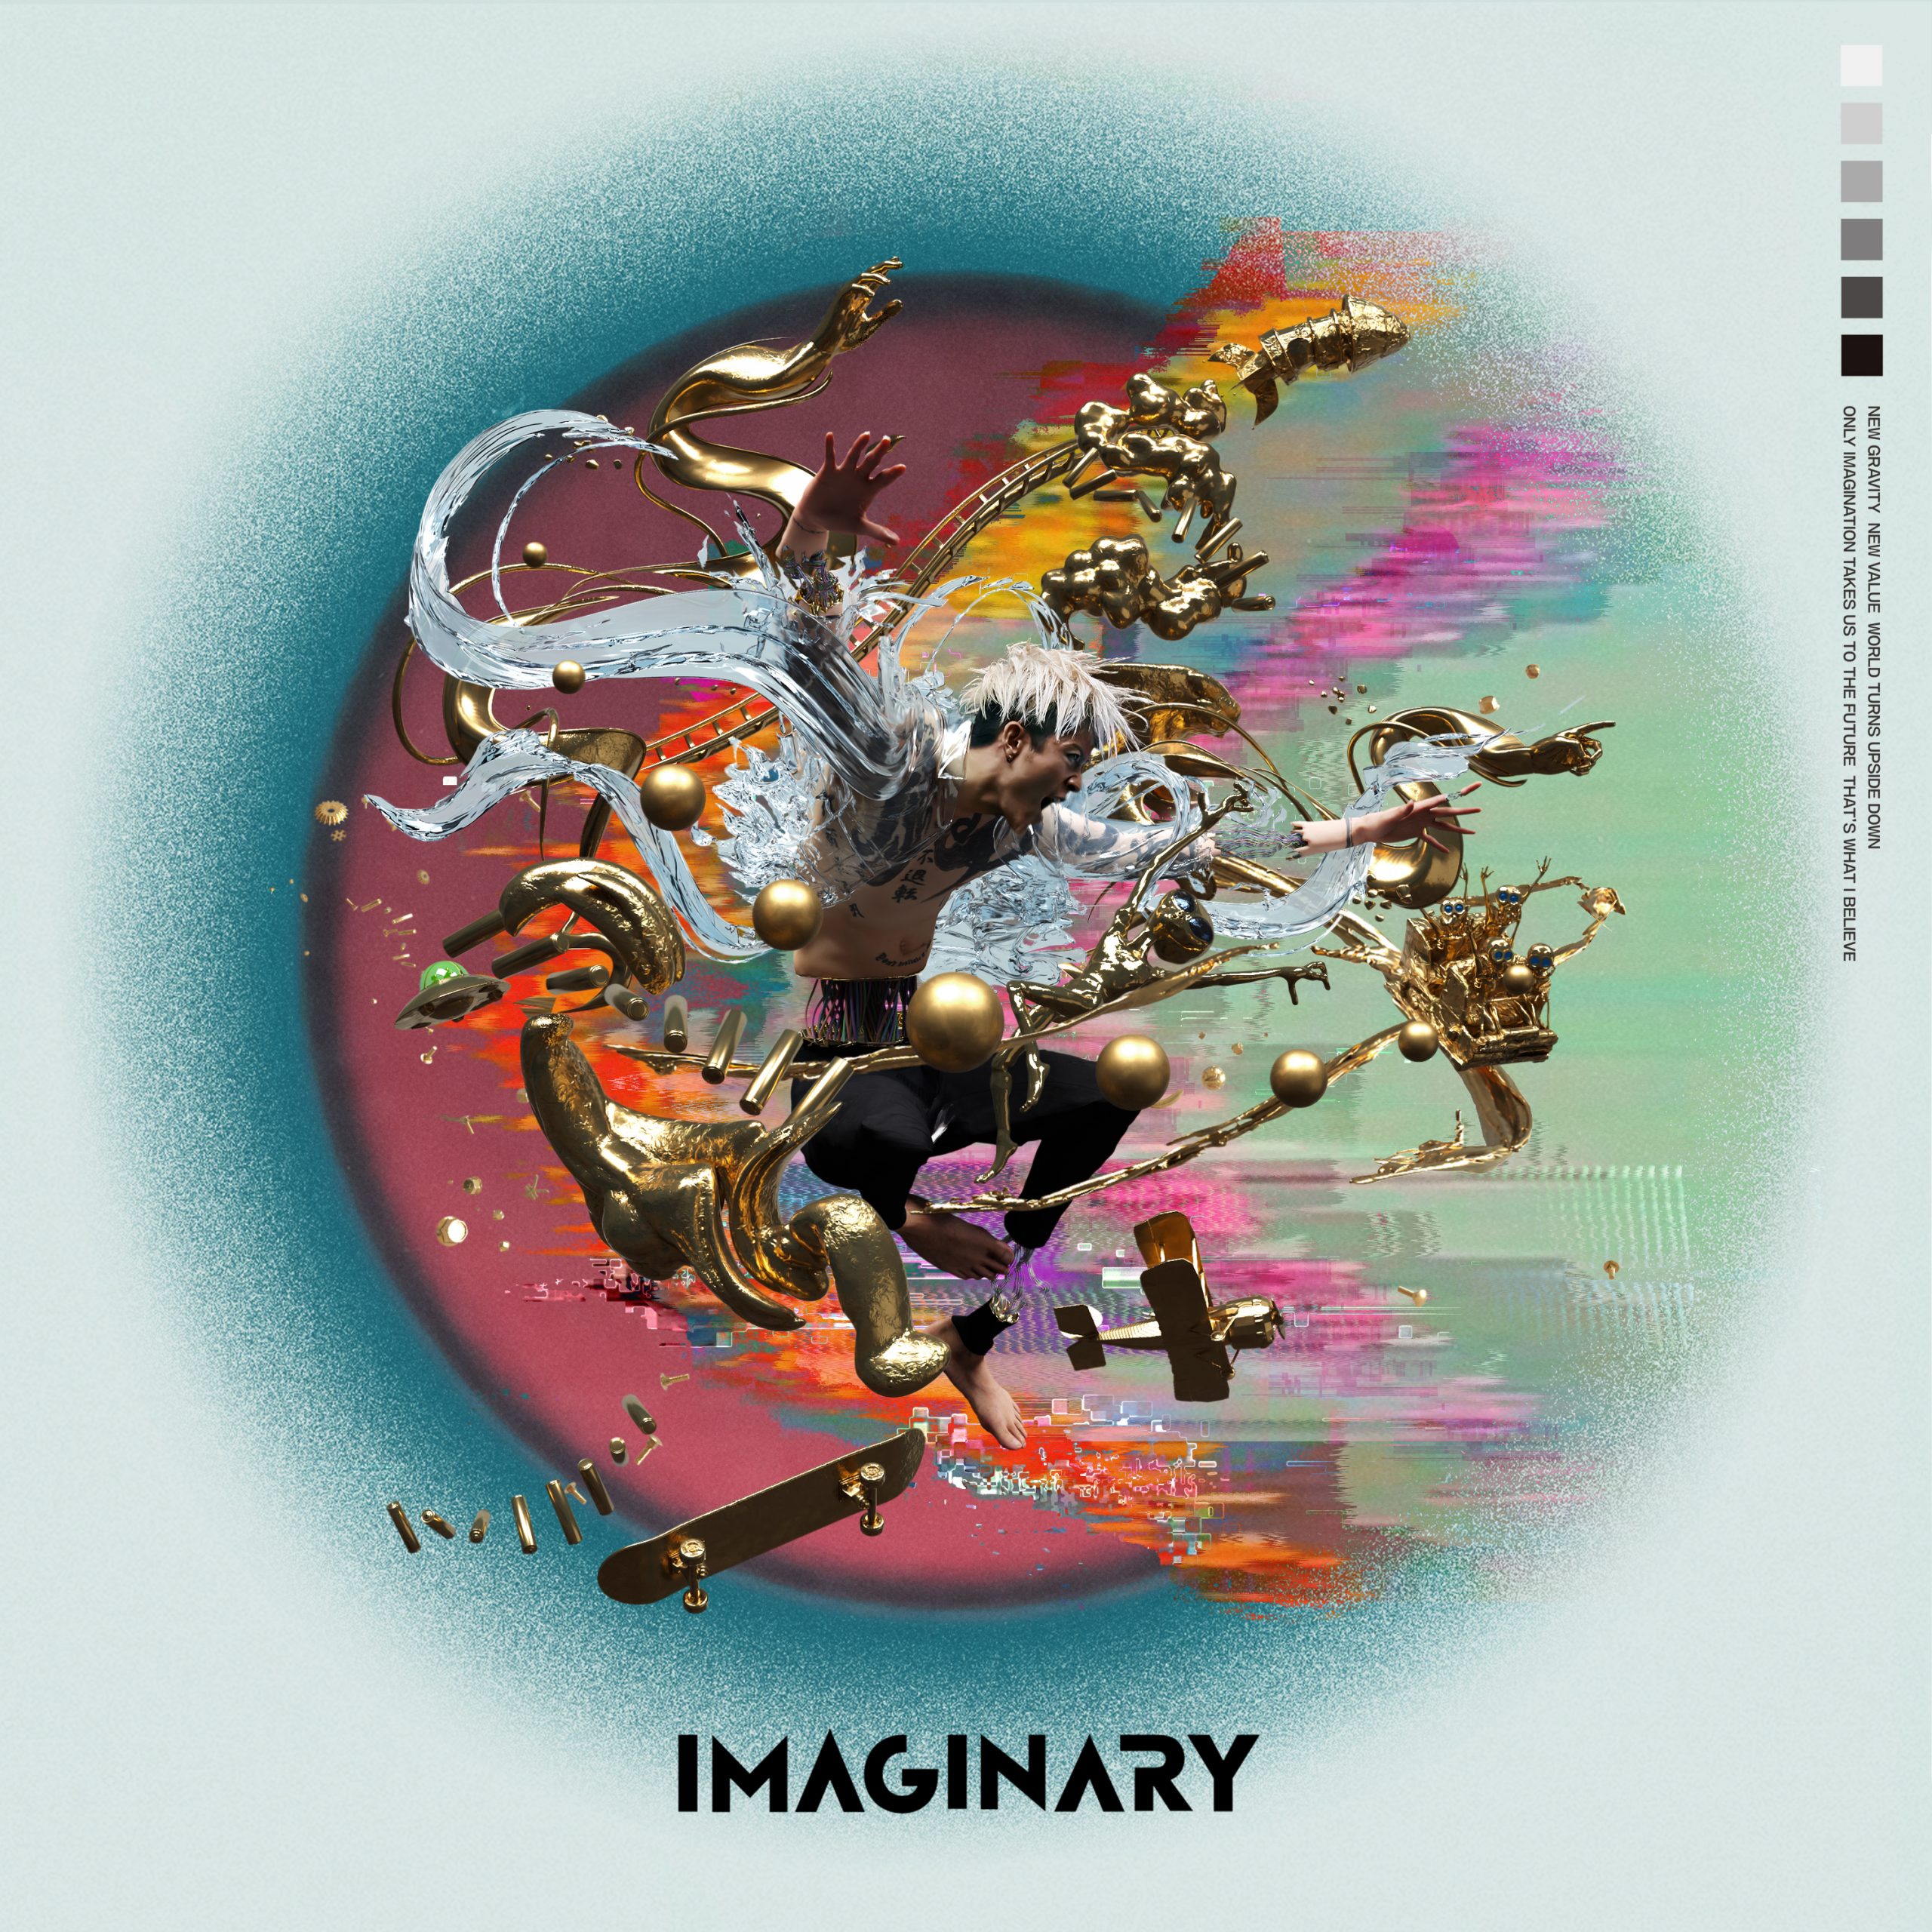 Miyavi 世界は反転する 想像の力で新しい世界へ飛び込め 13thオリジナル フルアルバム Imaginary Newアーティスト写真 ジャケット写真公開 リード曲 New Gravity 本日先行配信 アルバム予約開始 アルバム収録全11曲トラックリスト公開 Miyavi